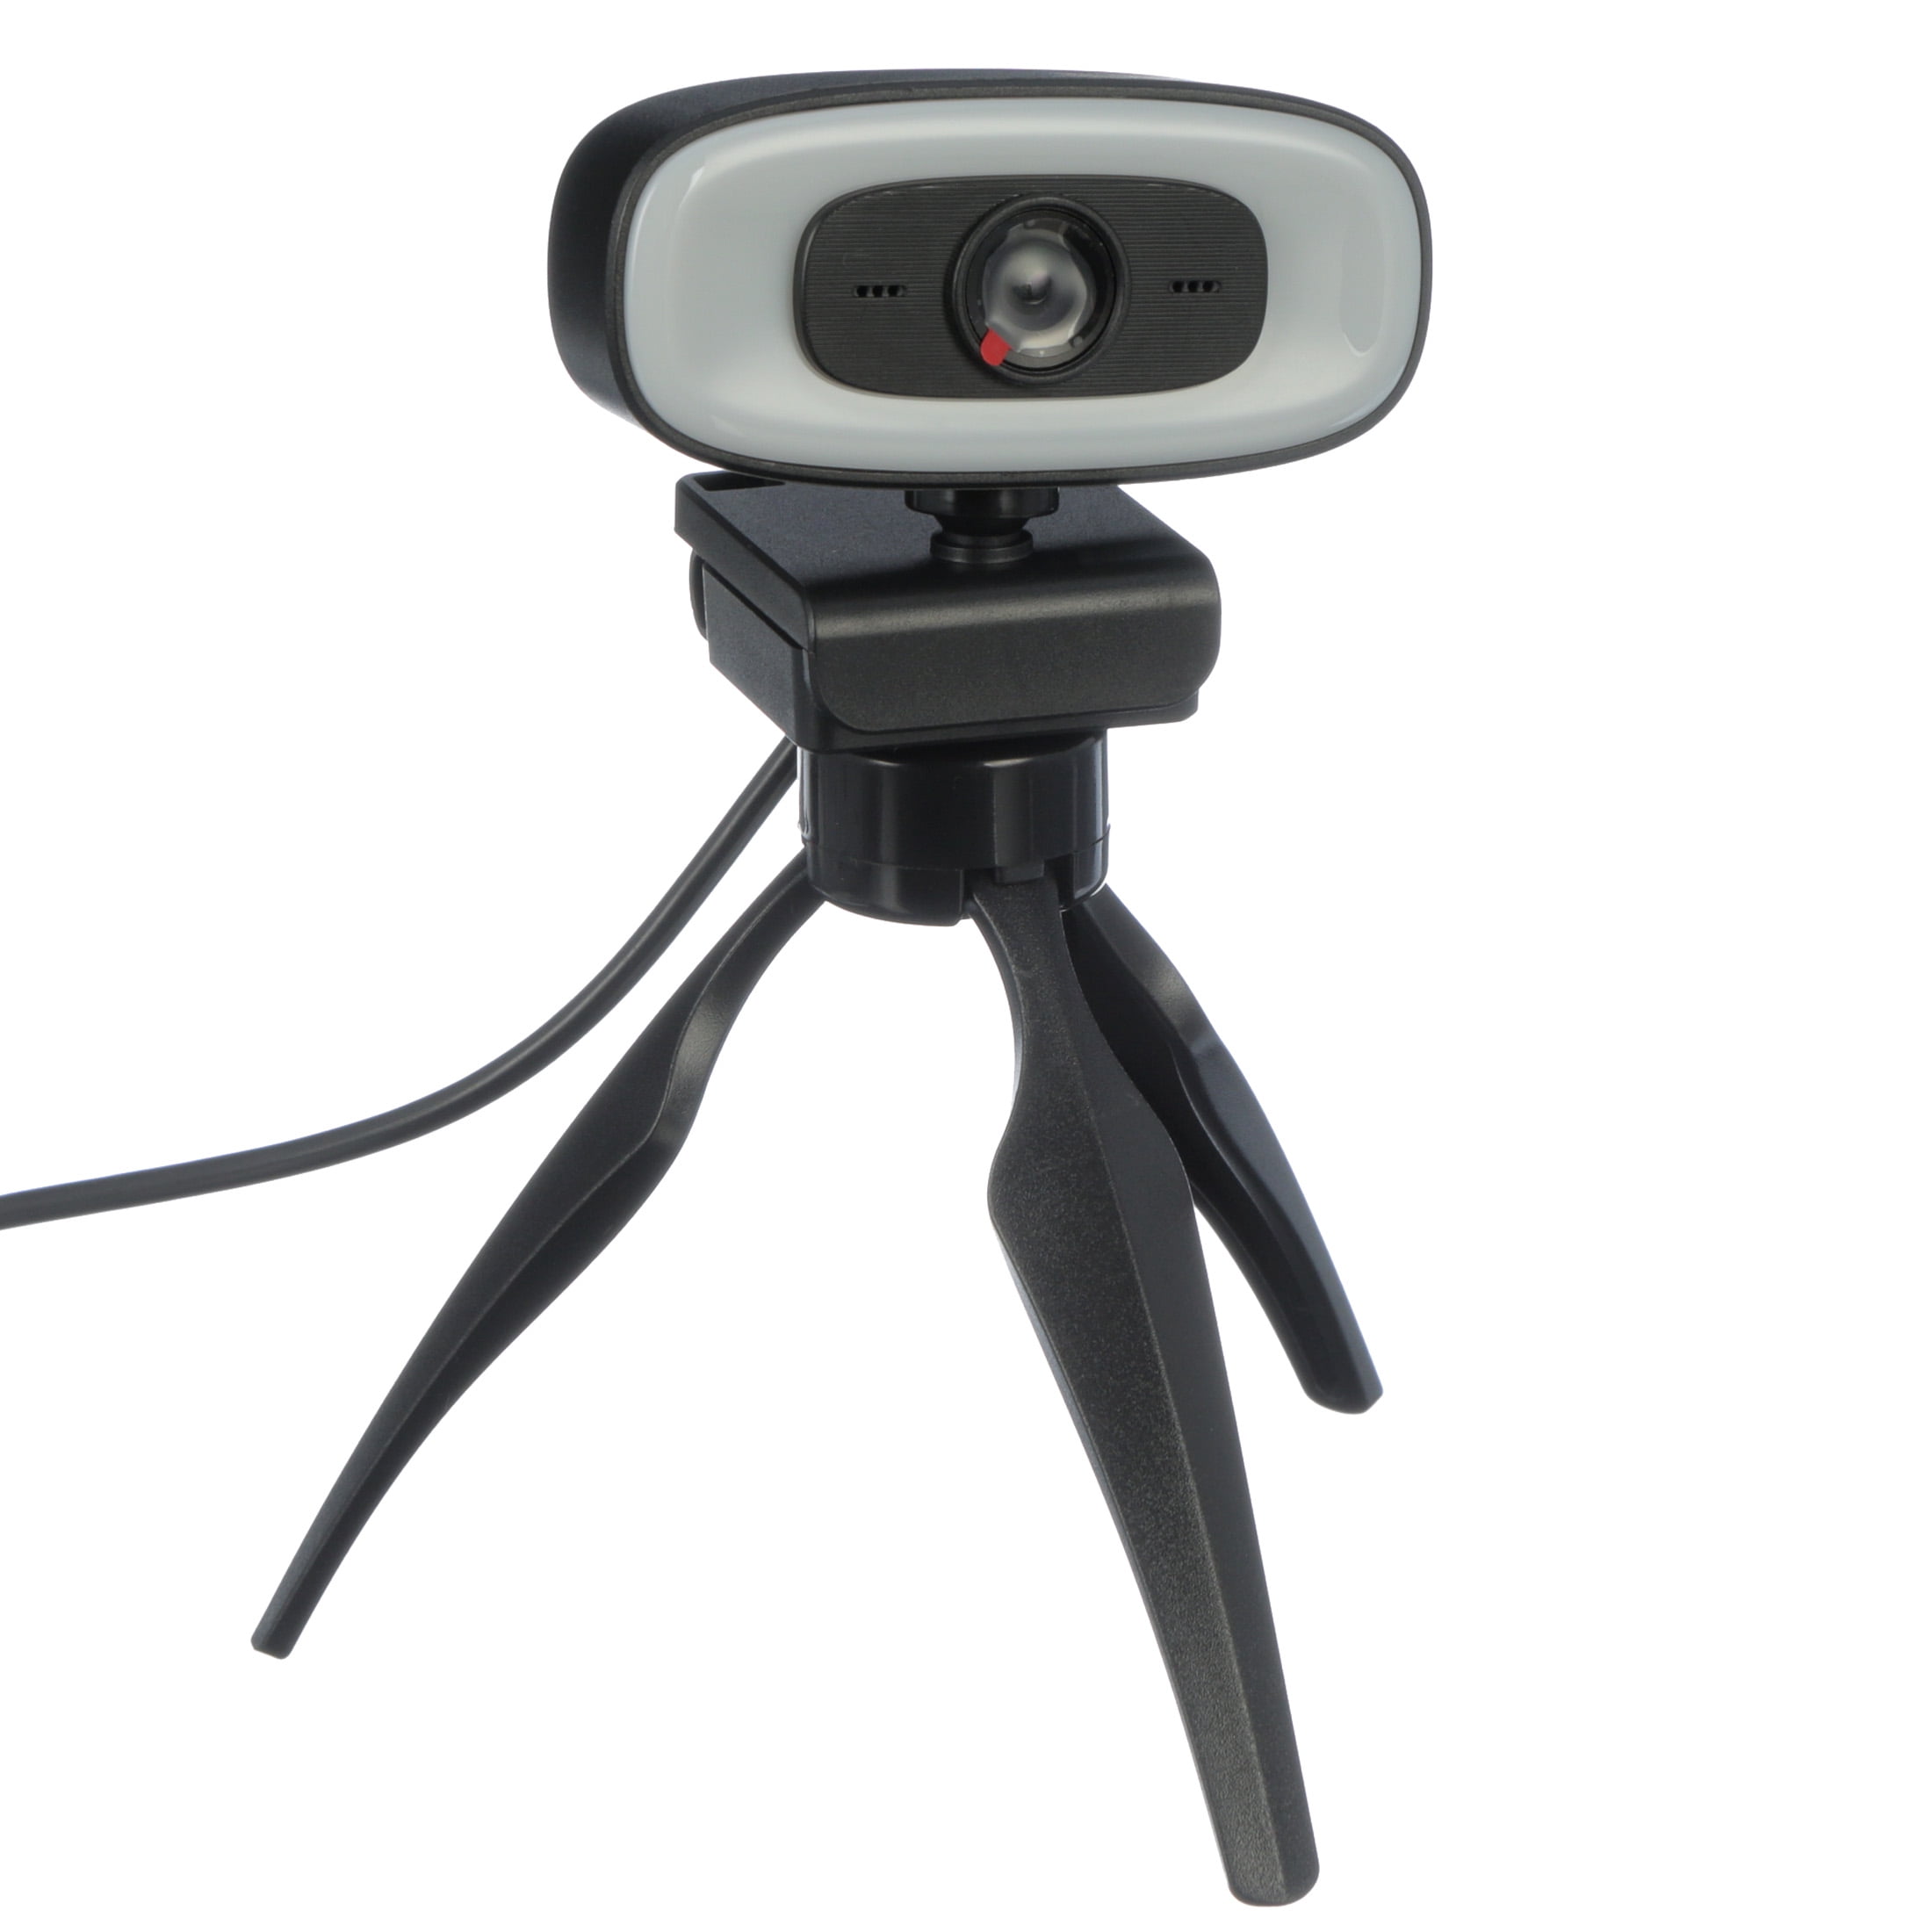 EMEET Bluetooth Headset Headphones W/Ring Light 1080P USB Webcam Web Camera  Set